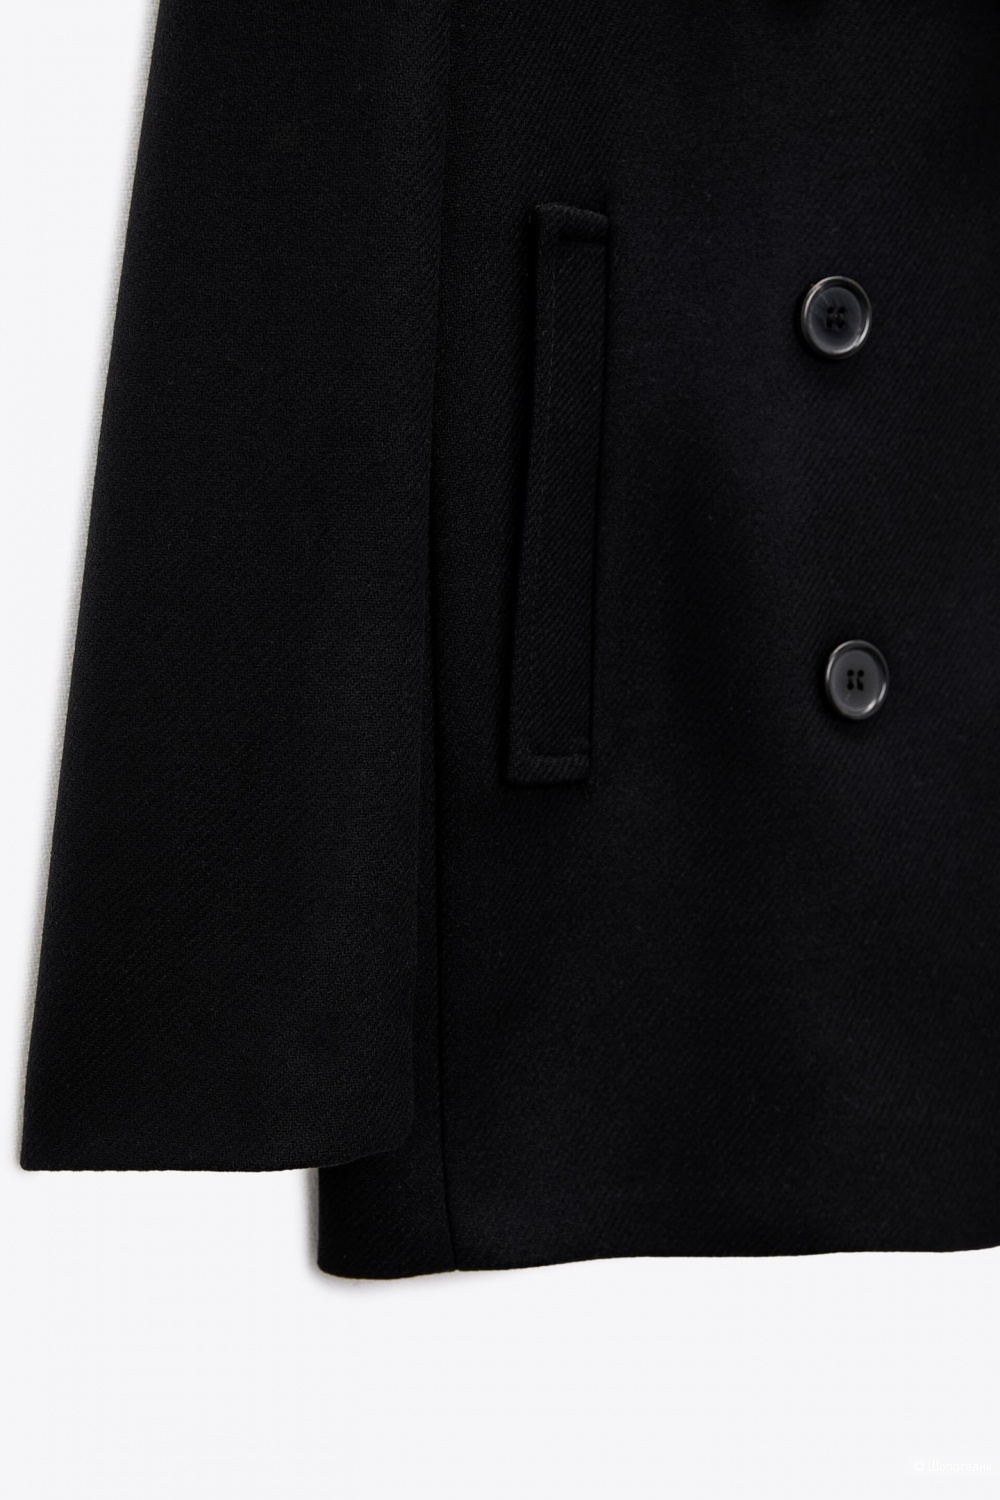 Пальто Zara limited edition, размер L